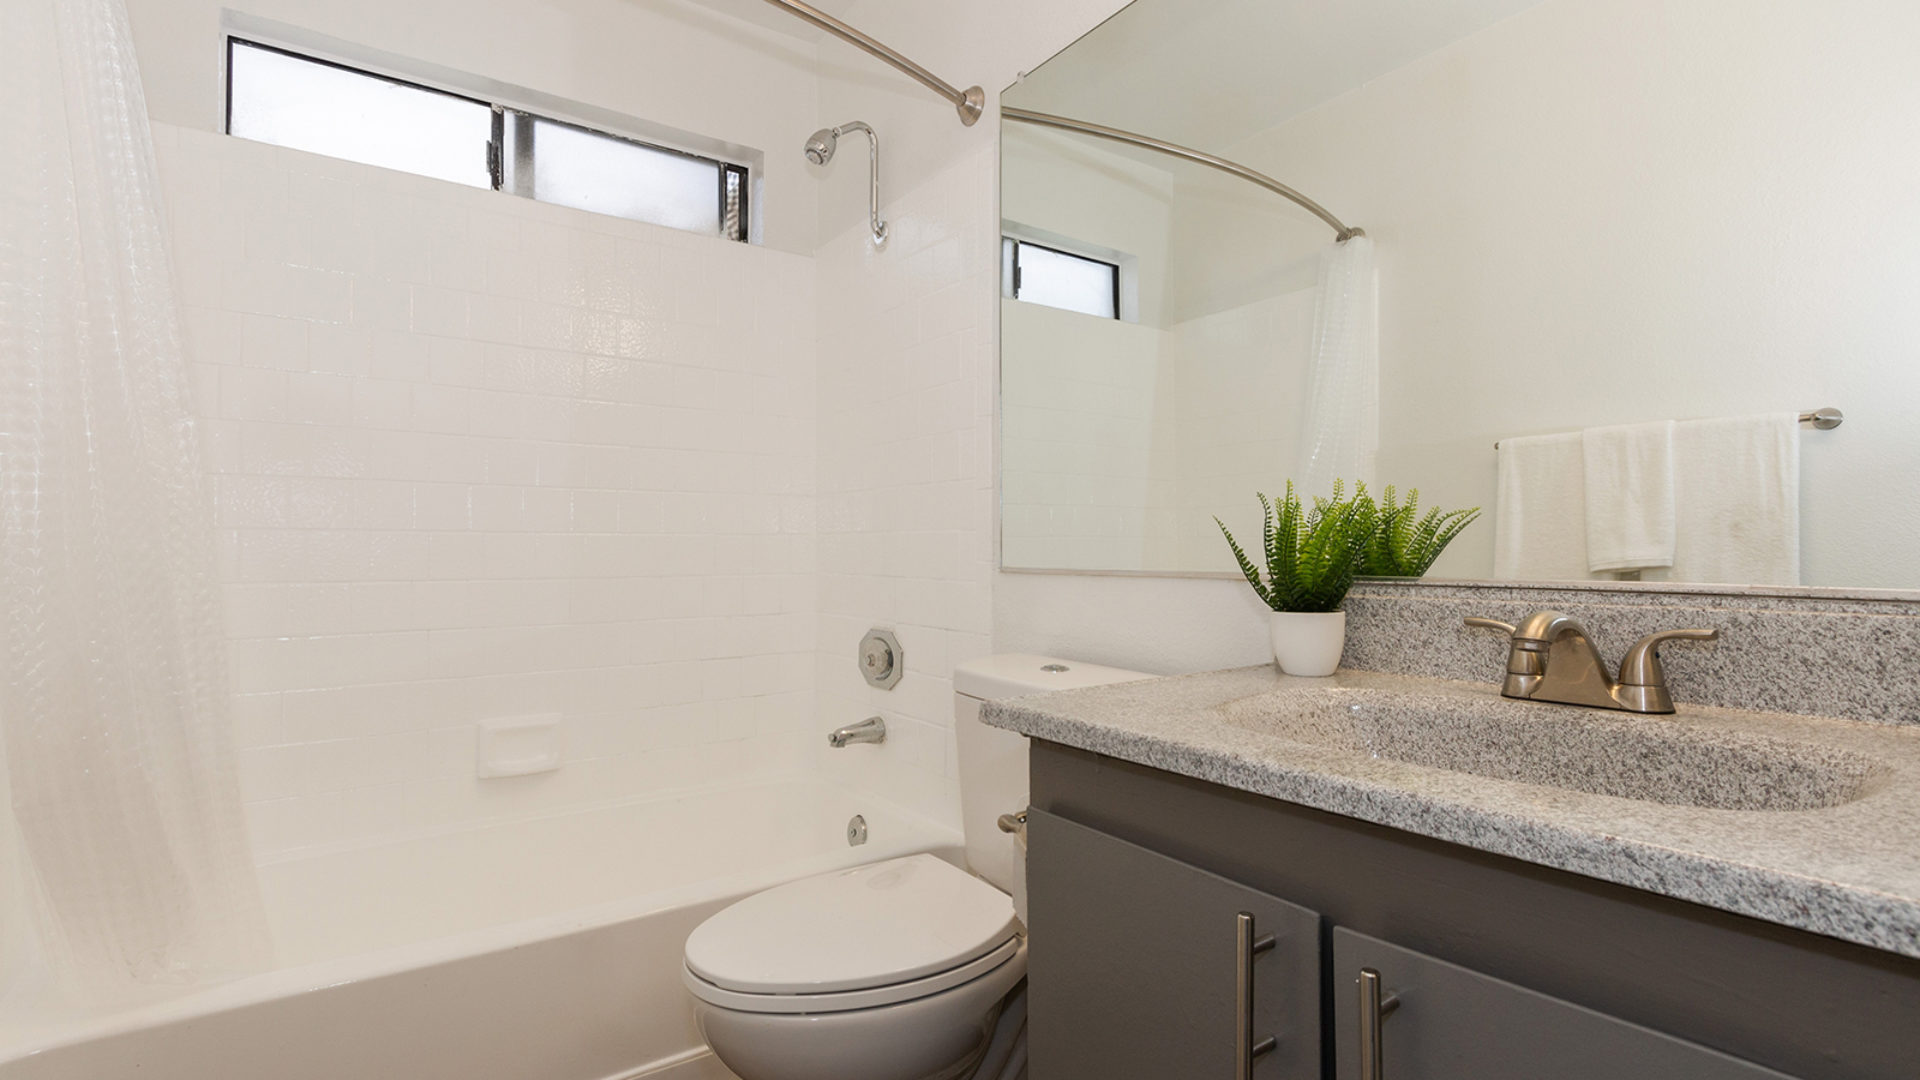 renew-riverside-apartment-homes-for-rent-in-riverside-ca-92503-bathroom (1)